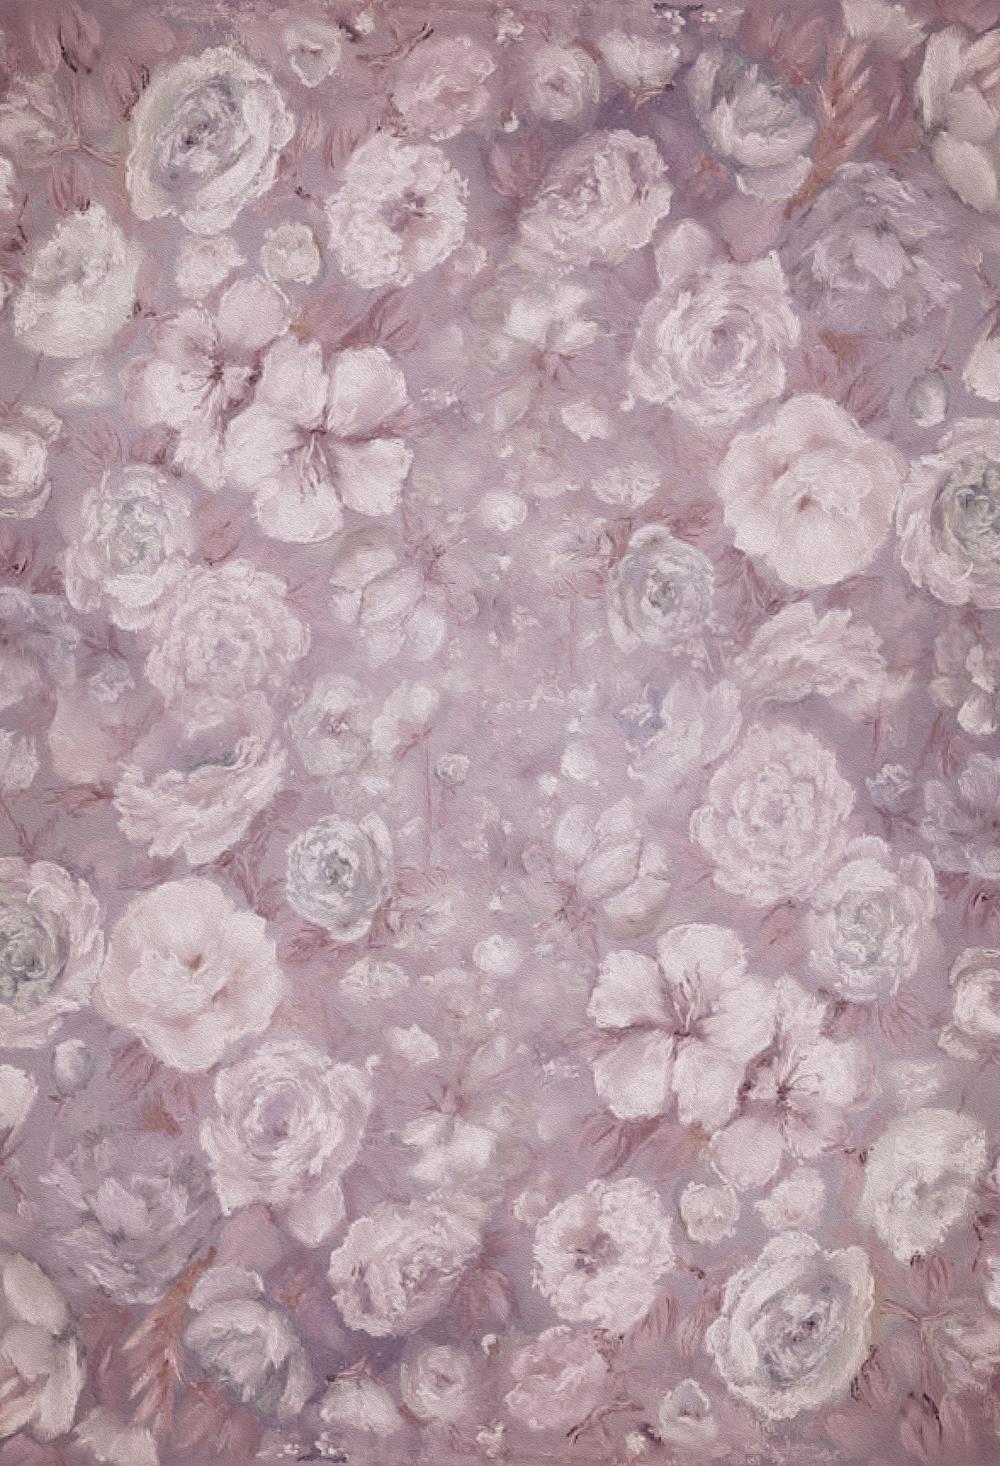 Fox Retro Purple Rose Vinyl/Fabric Backdrop for Photography